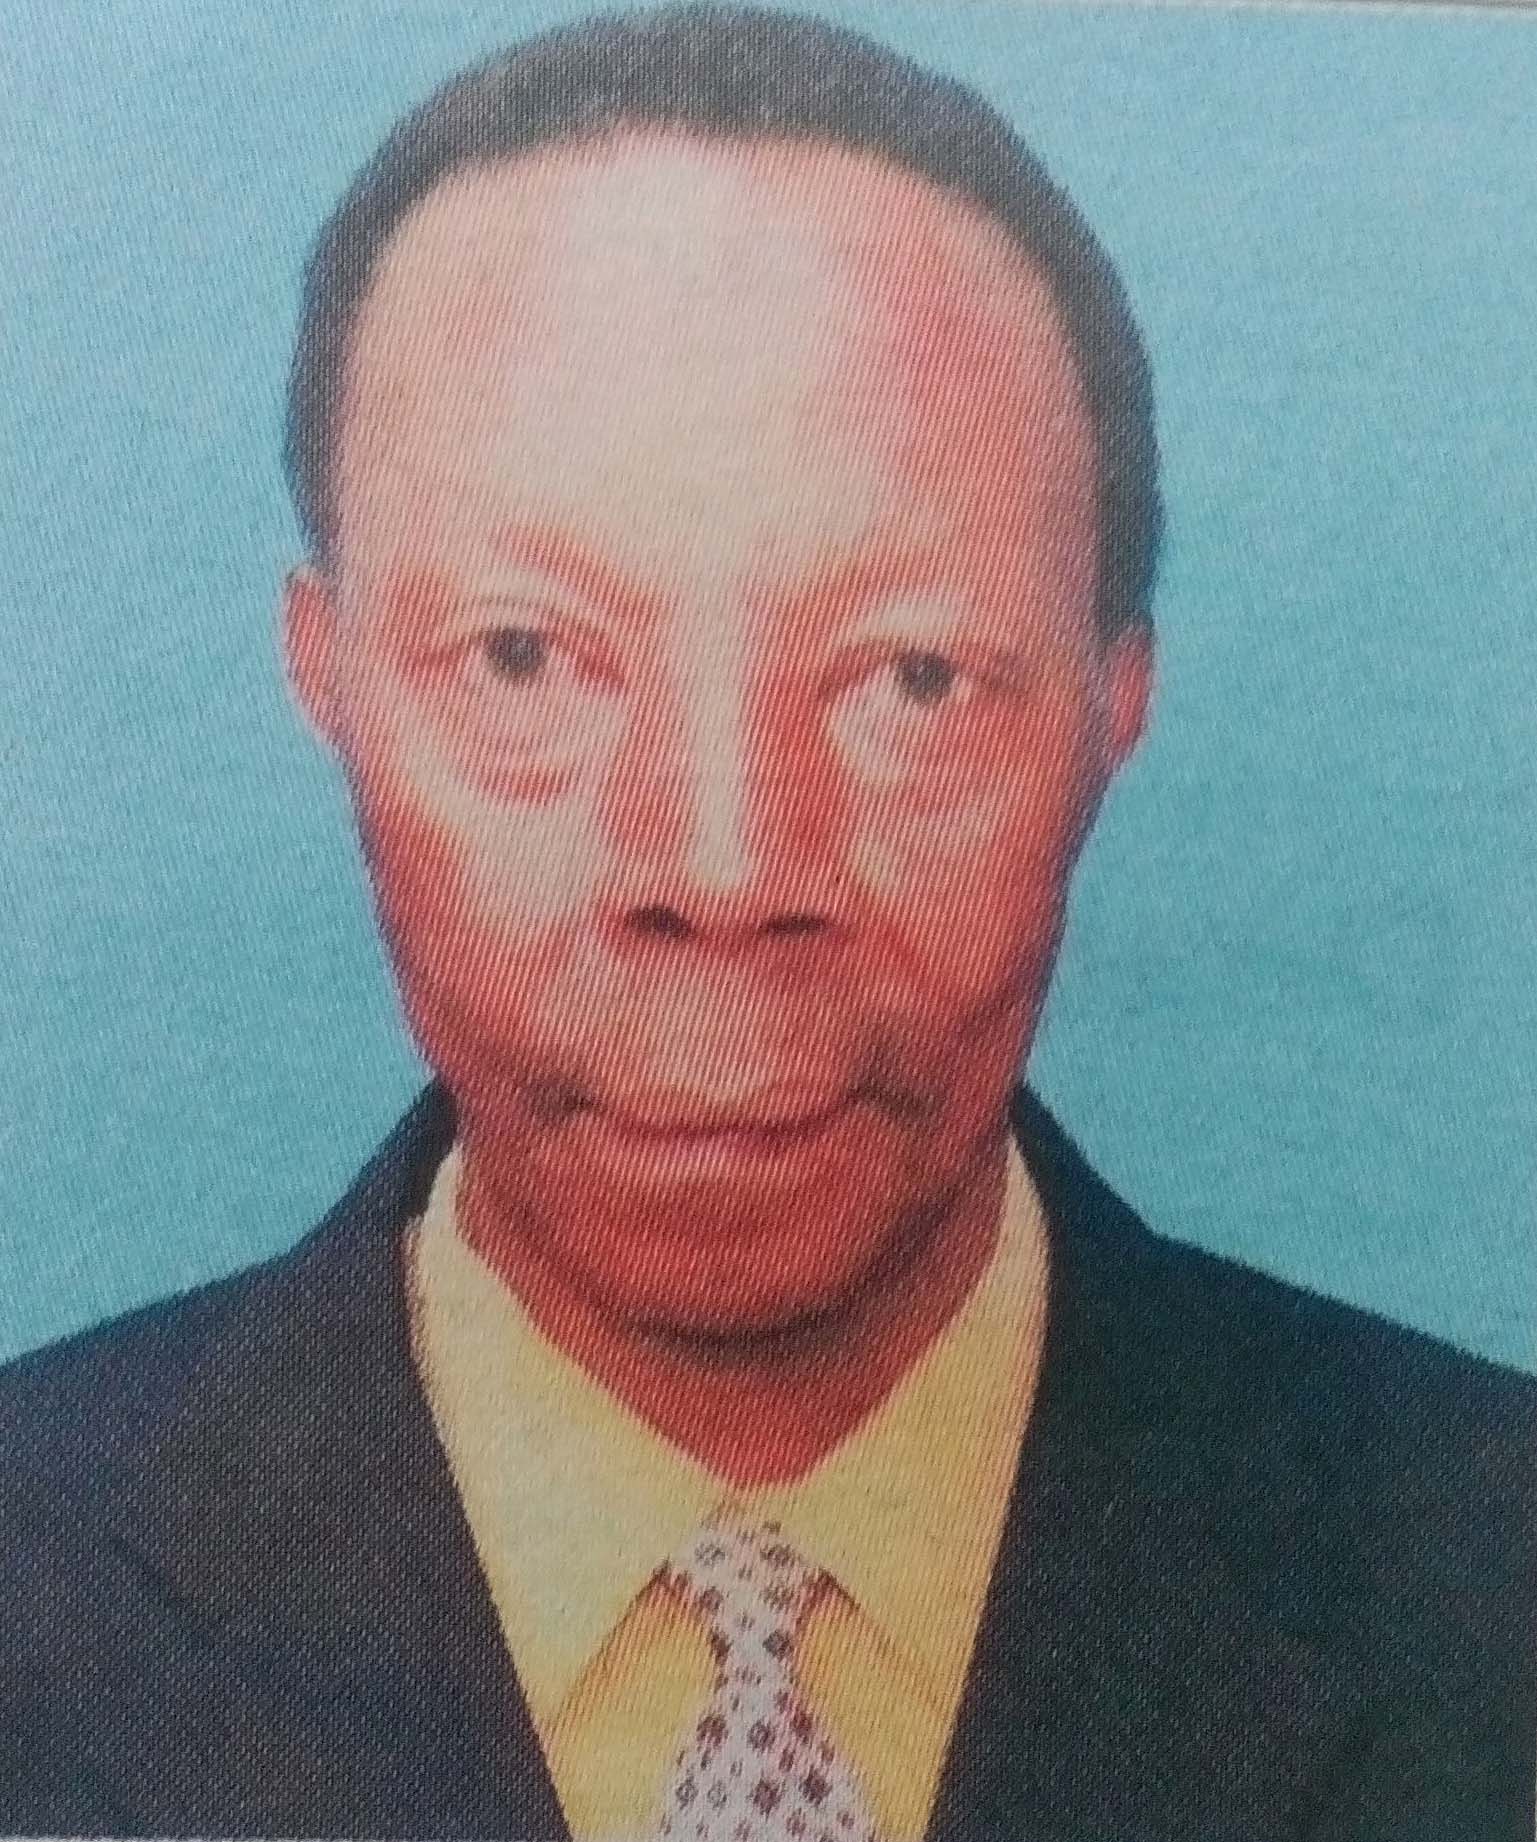 Obituary Image of John Muriuki Mweri (J.E.; Salim)